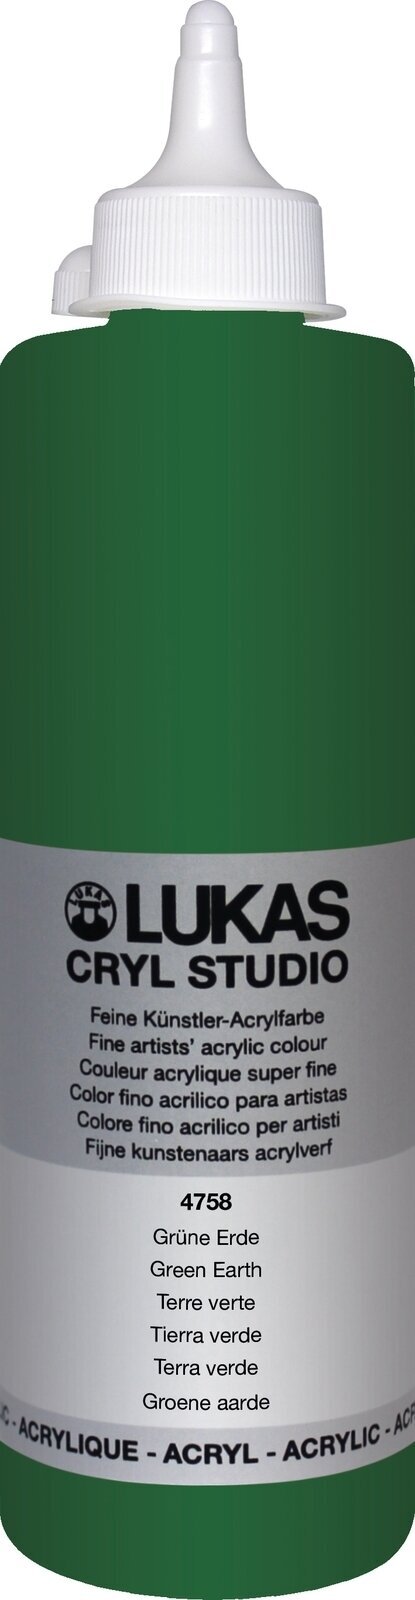 Tinta acrílica Lukas Cryl Studio Tinta acrílica 500 ml Green Earth